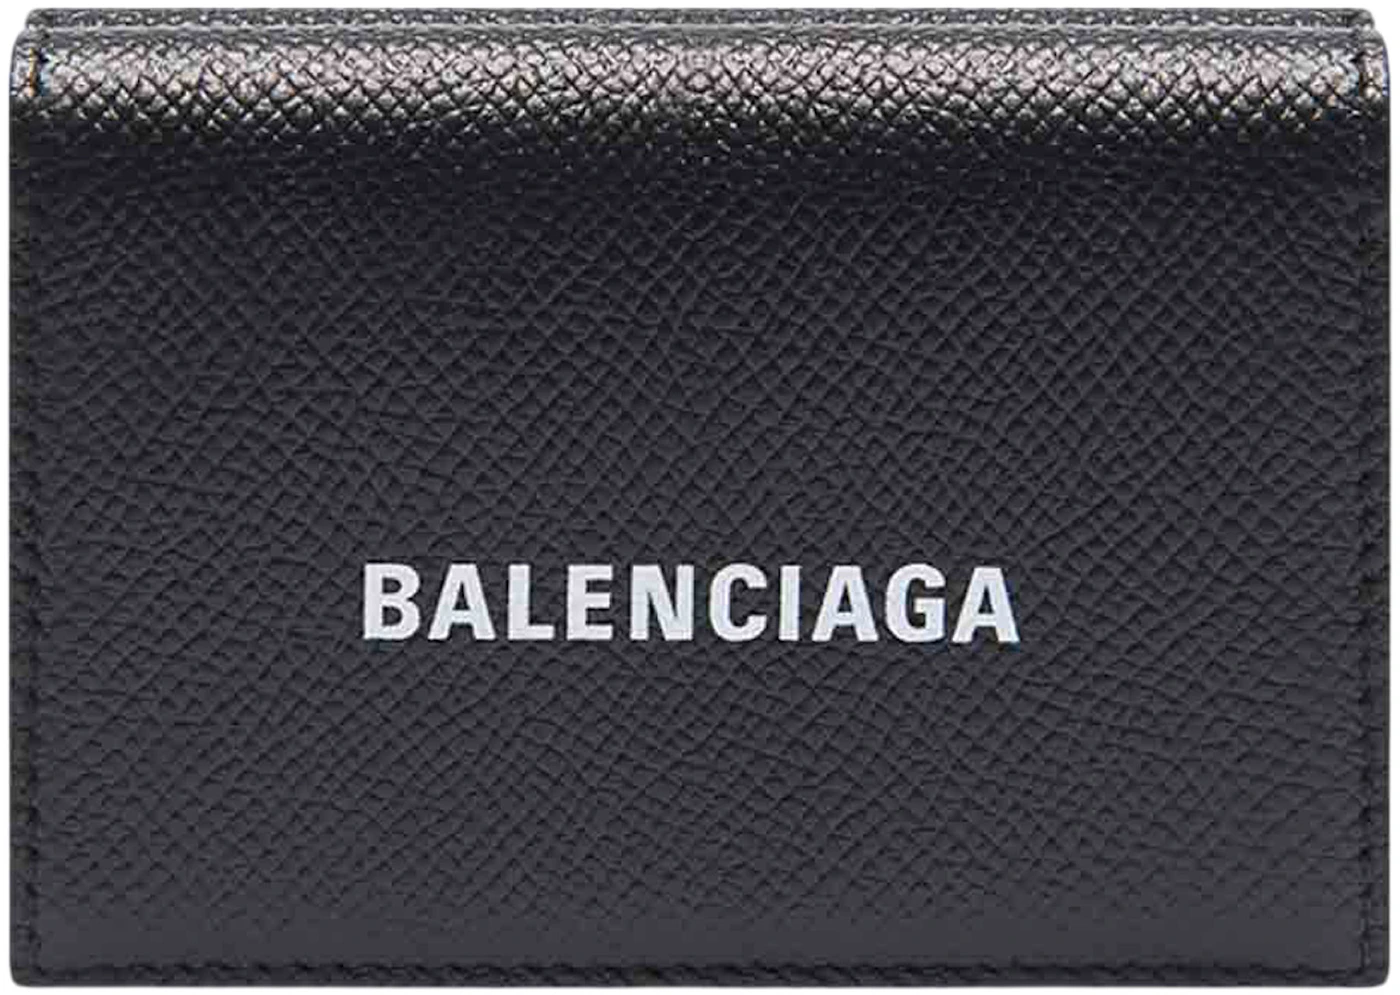 Balenciaga Men's Cash Wallet Mini Black/White in Calfskin Leather with Silver-tone - US